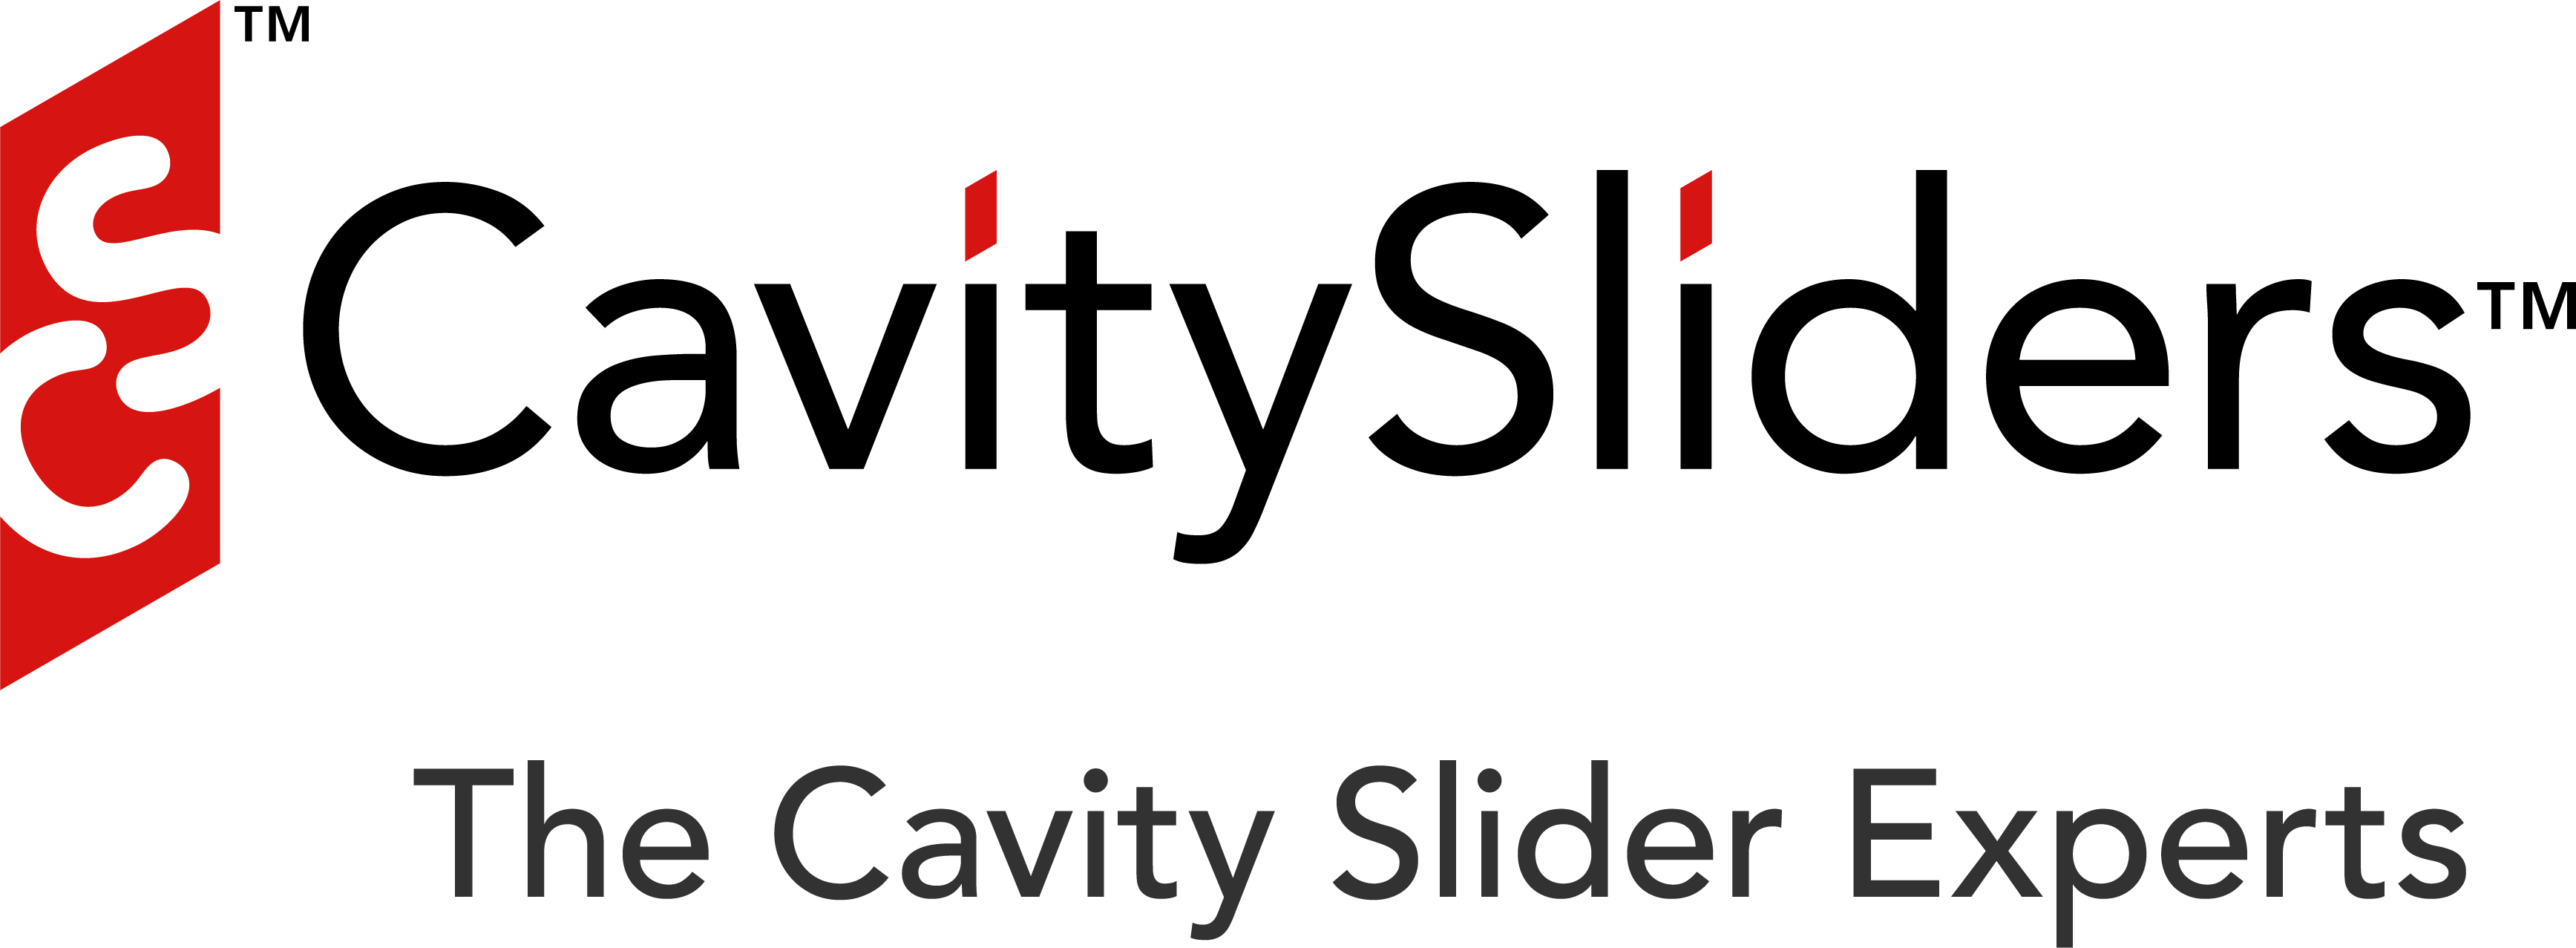 Cavity Sliders AU with tag